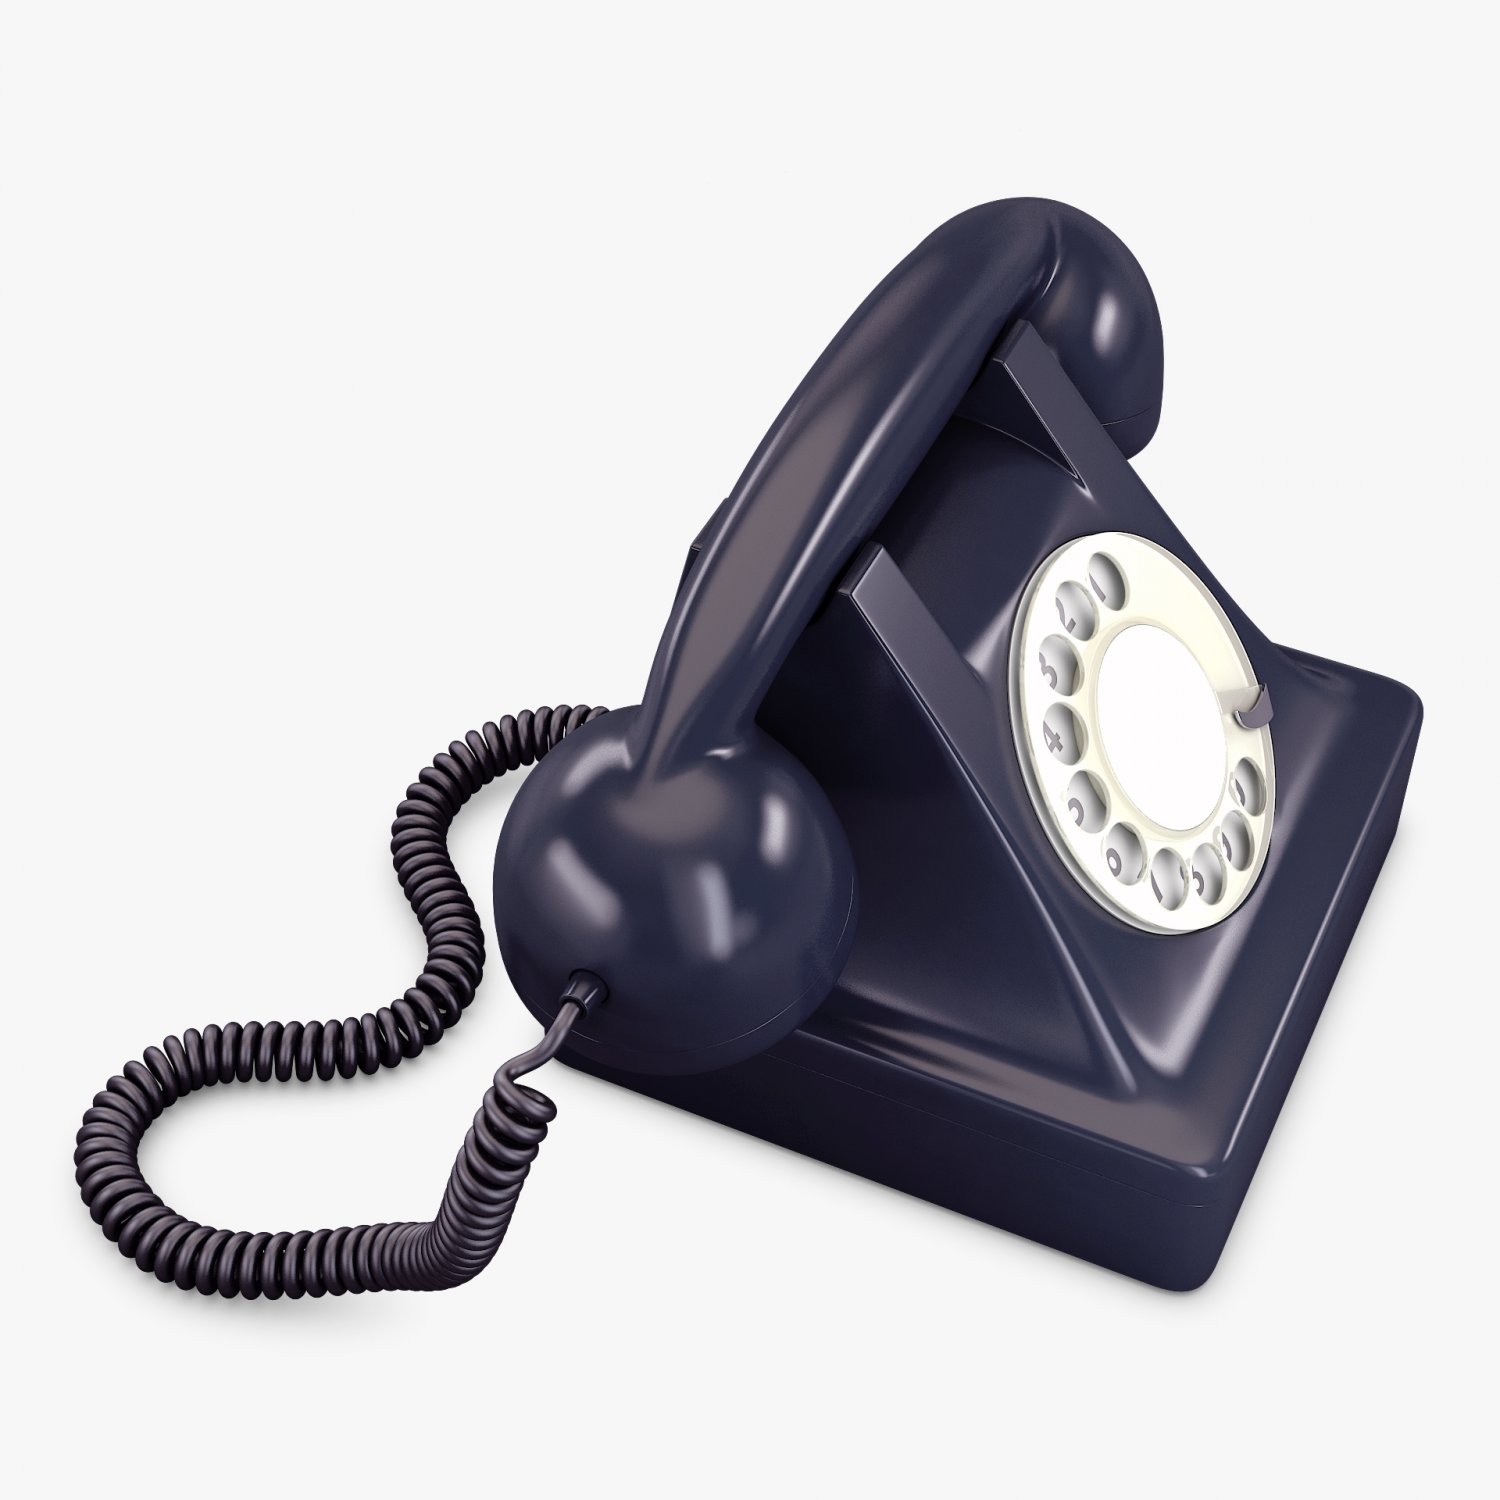 Жэк 5 телефон. 05 Телефон. Телефон v1914a. Telephone 3d Silver. Retro telephone 1925.